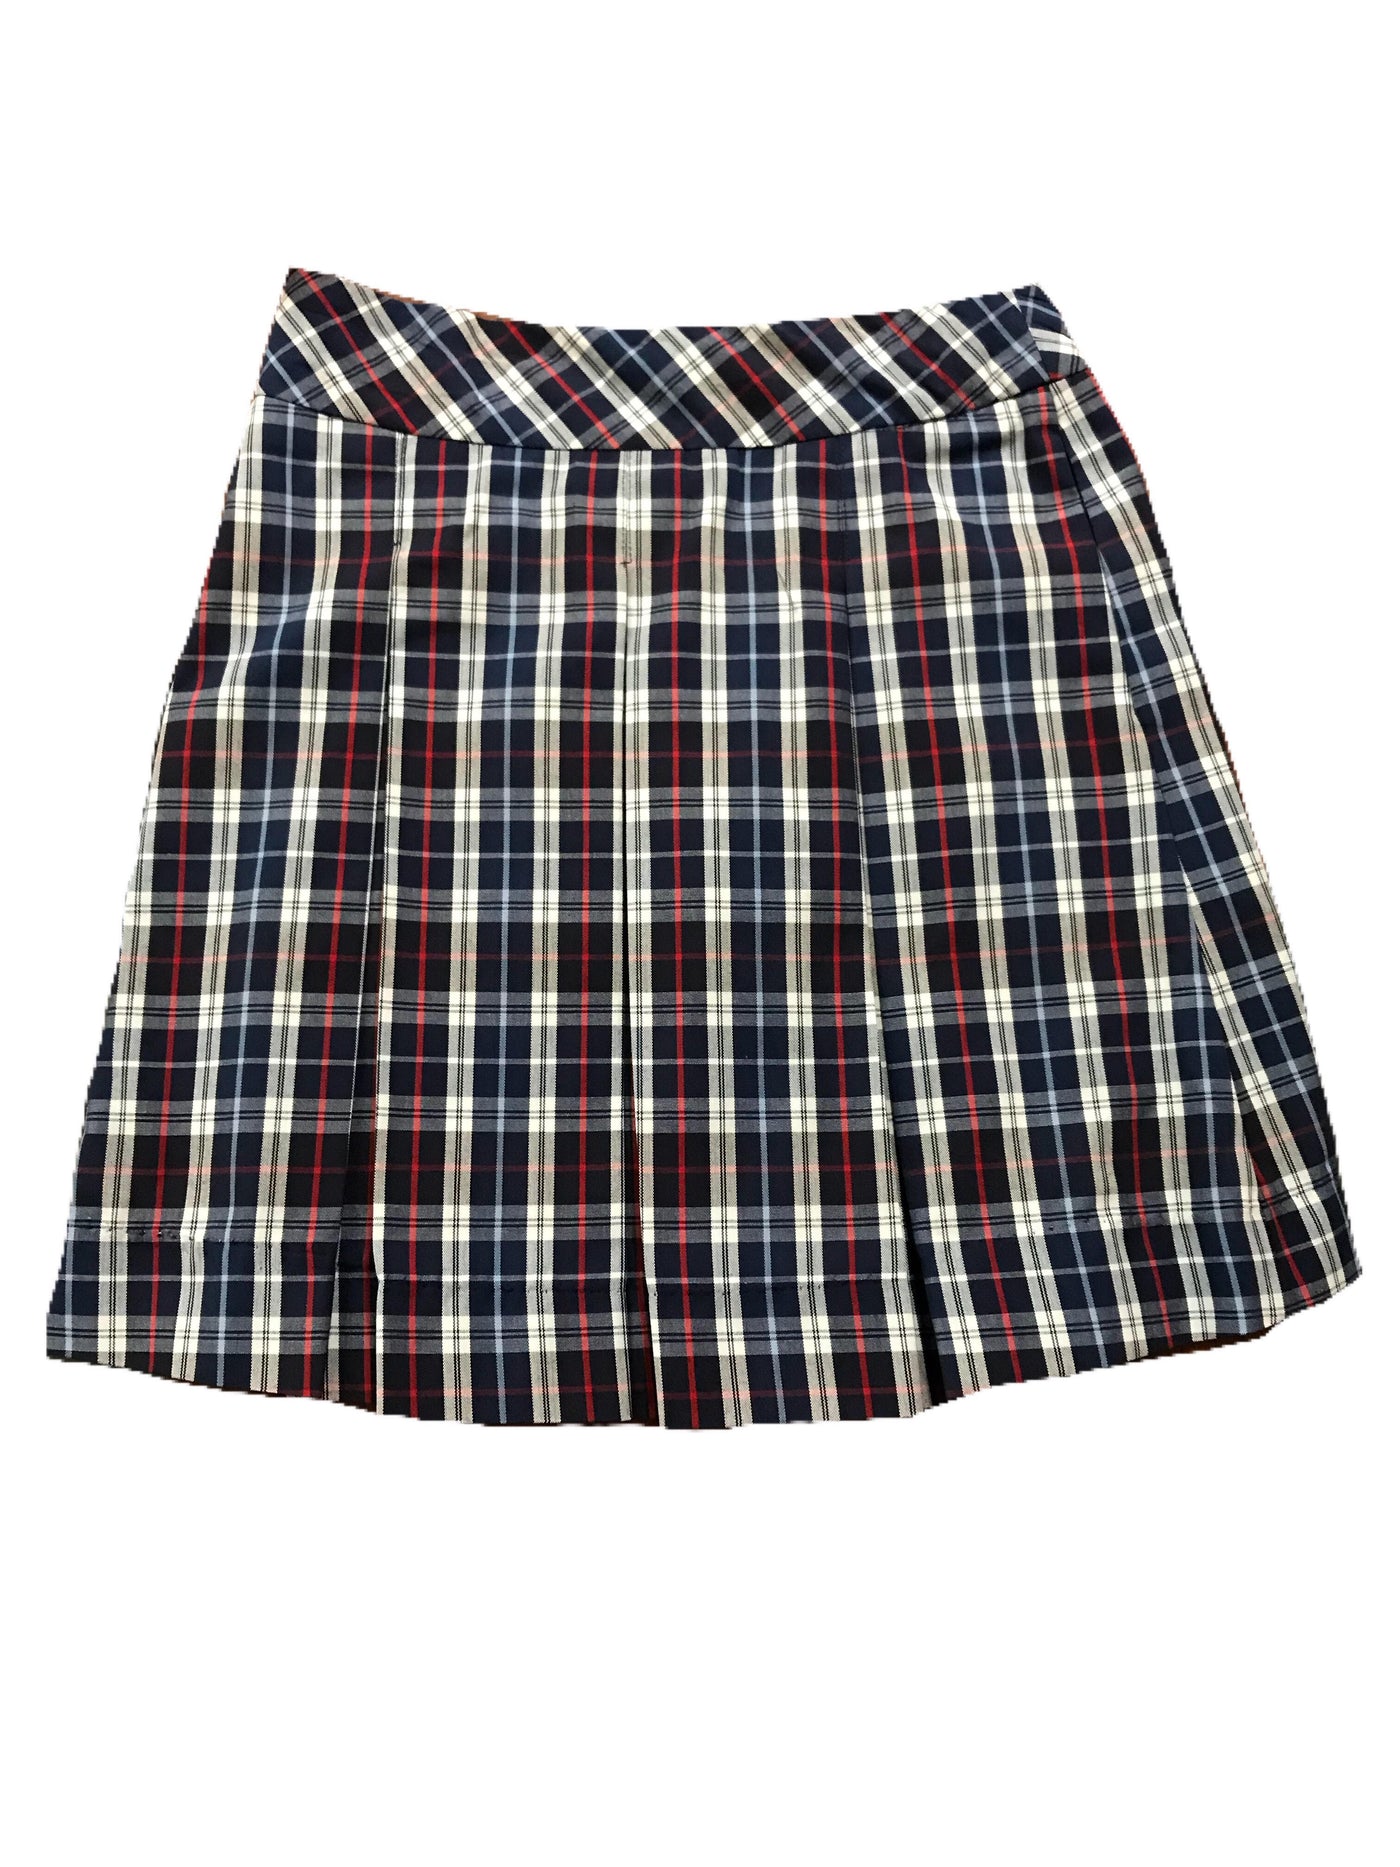 St. Paul plaid skirt